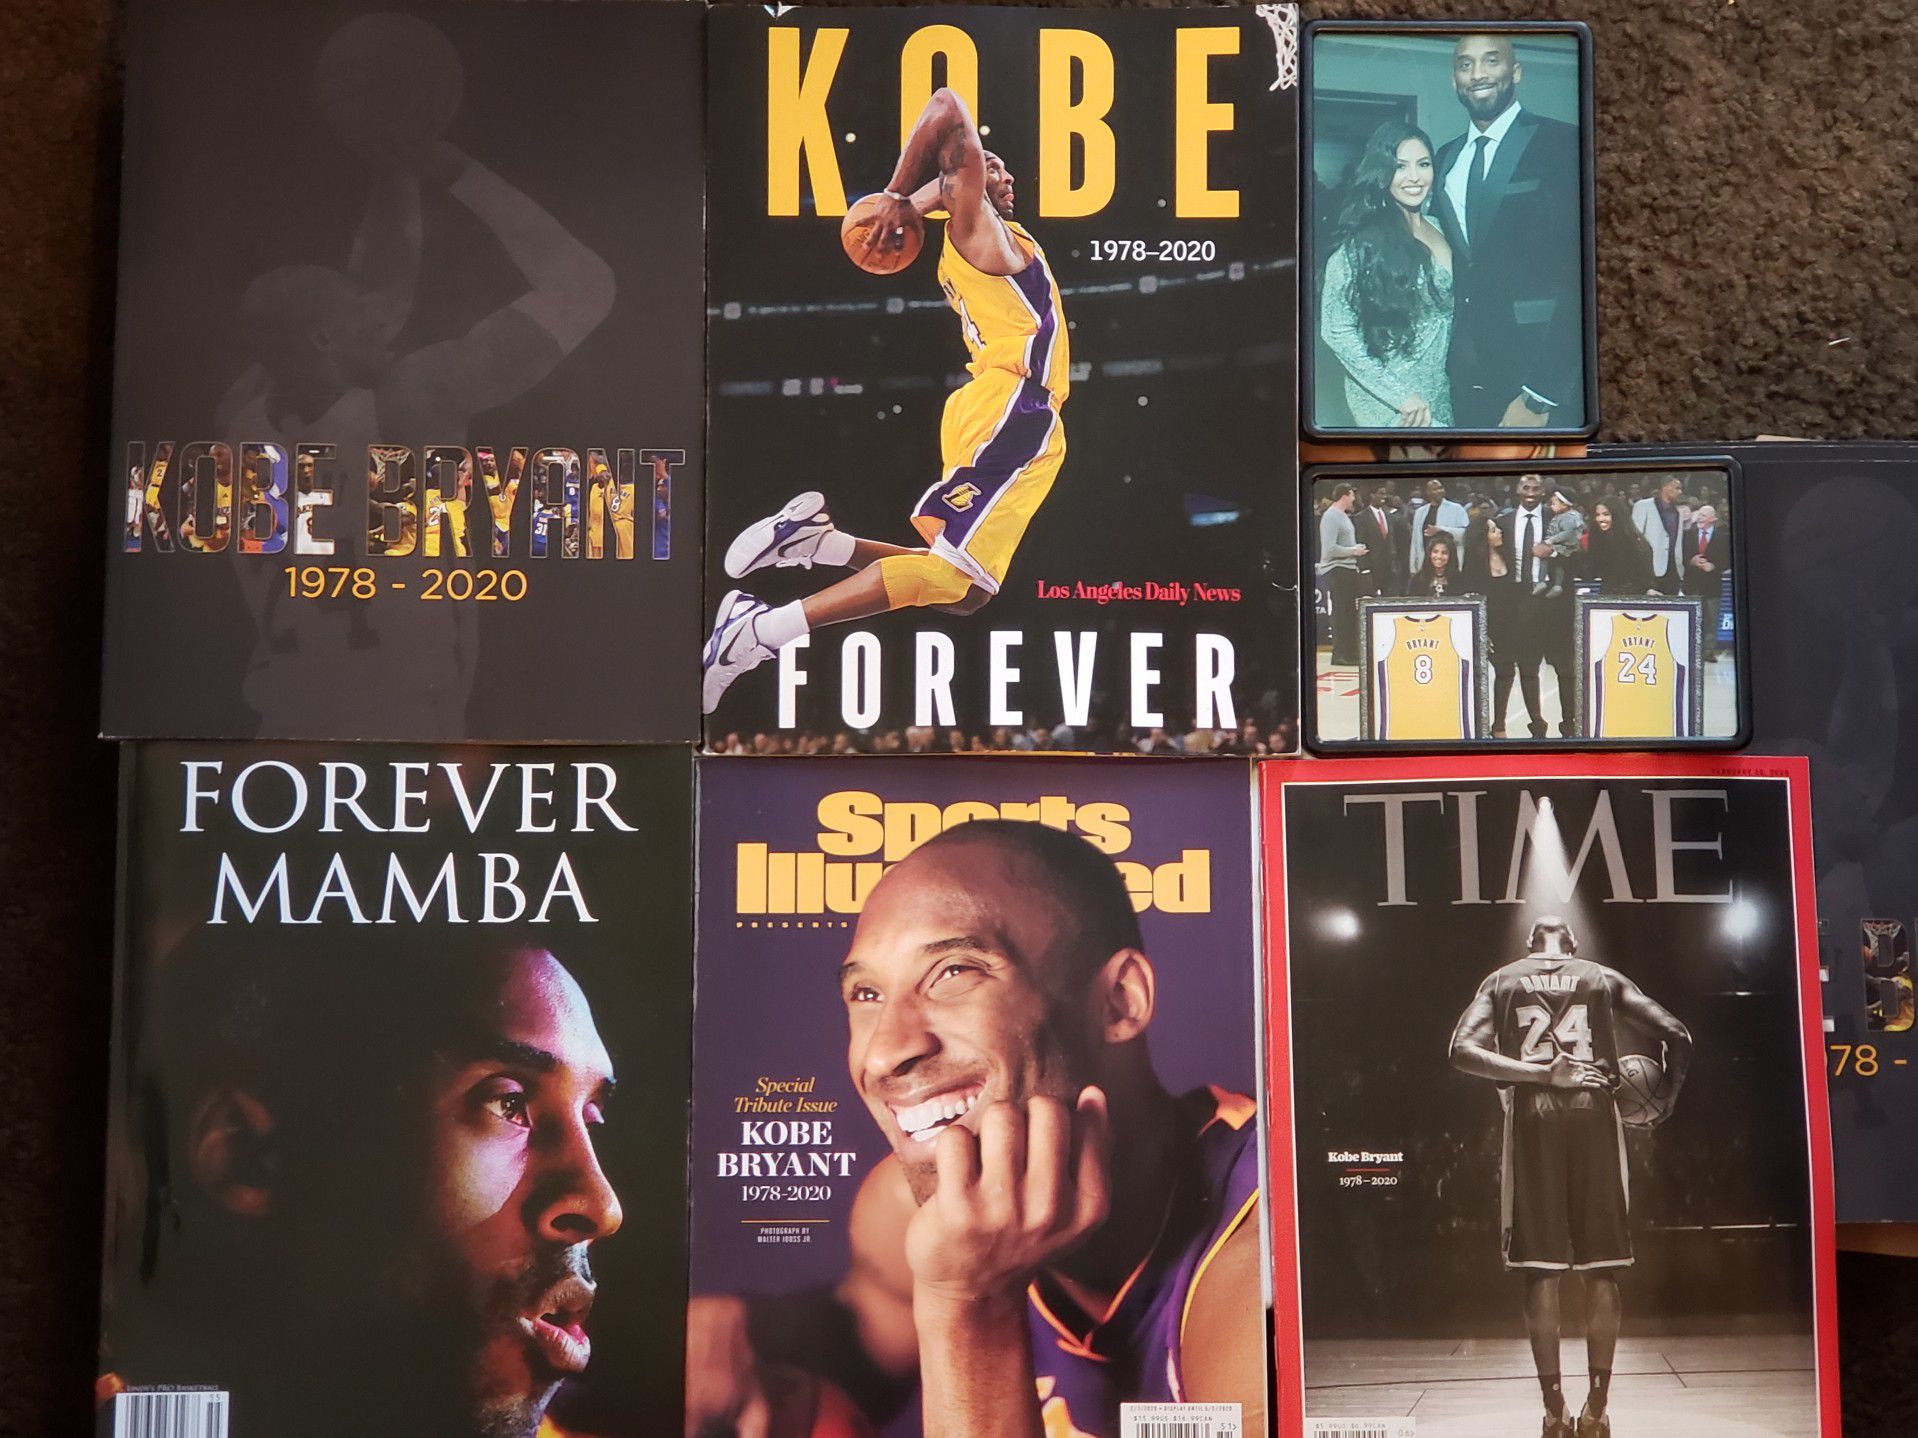 5 Sports Illustrated KOBE BRYANT, MAMBA FOREVER, TIMES KOBE BRYANT 2/20/20, LAKERS FOR LIFE , La Daily News kobe Forever